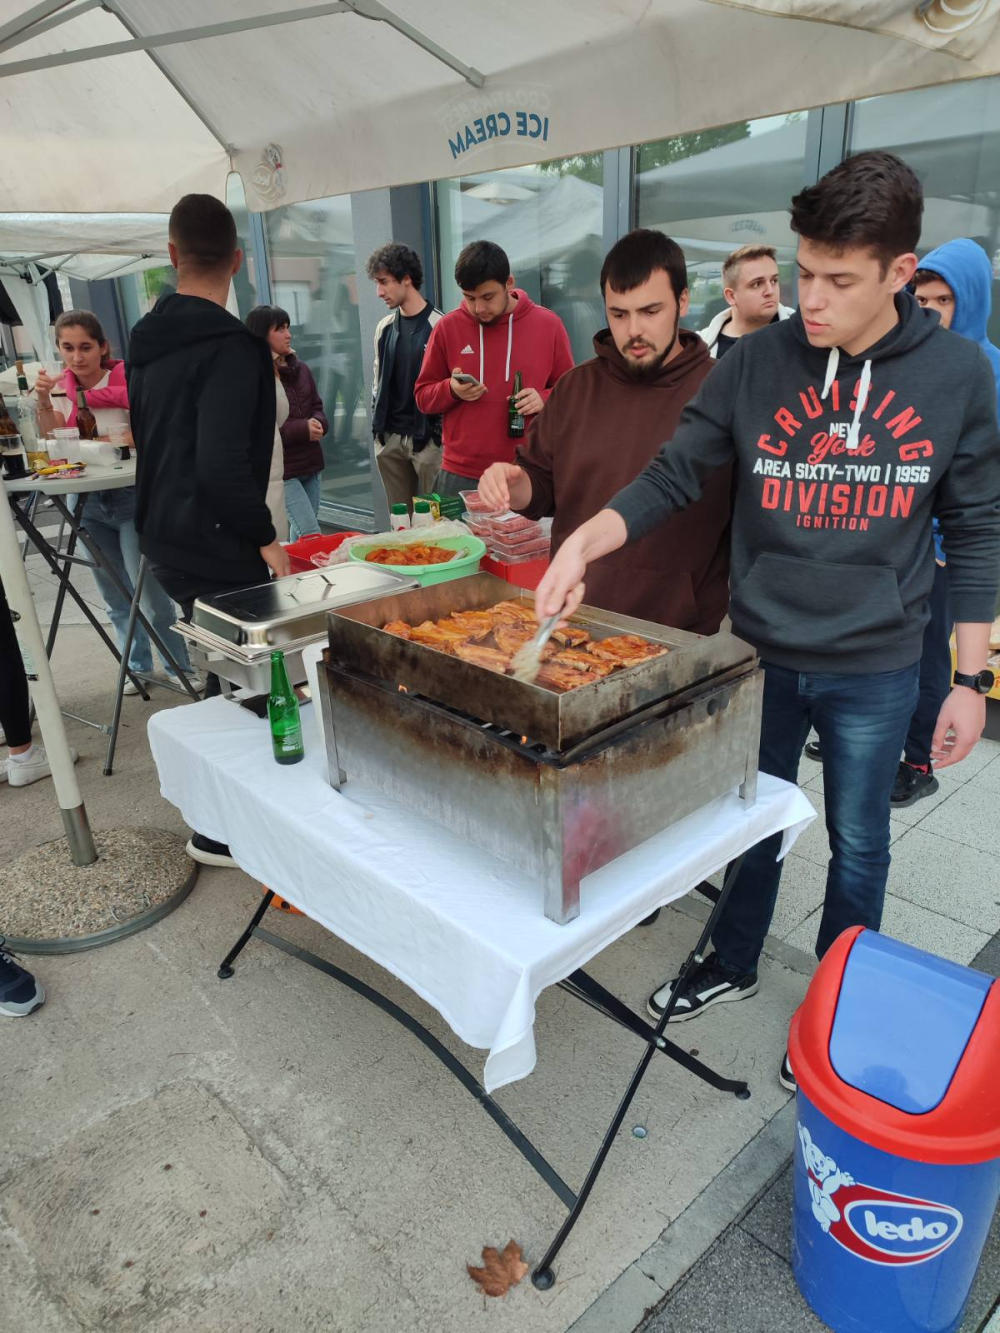 Požega.eu | UGODNO DRUŽENJE: Studenti kroz kviz pokazali znanje, a nastavili na studentskoj roštiljadi